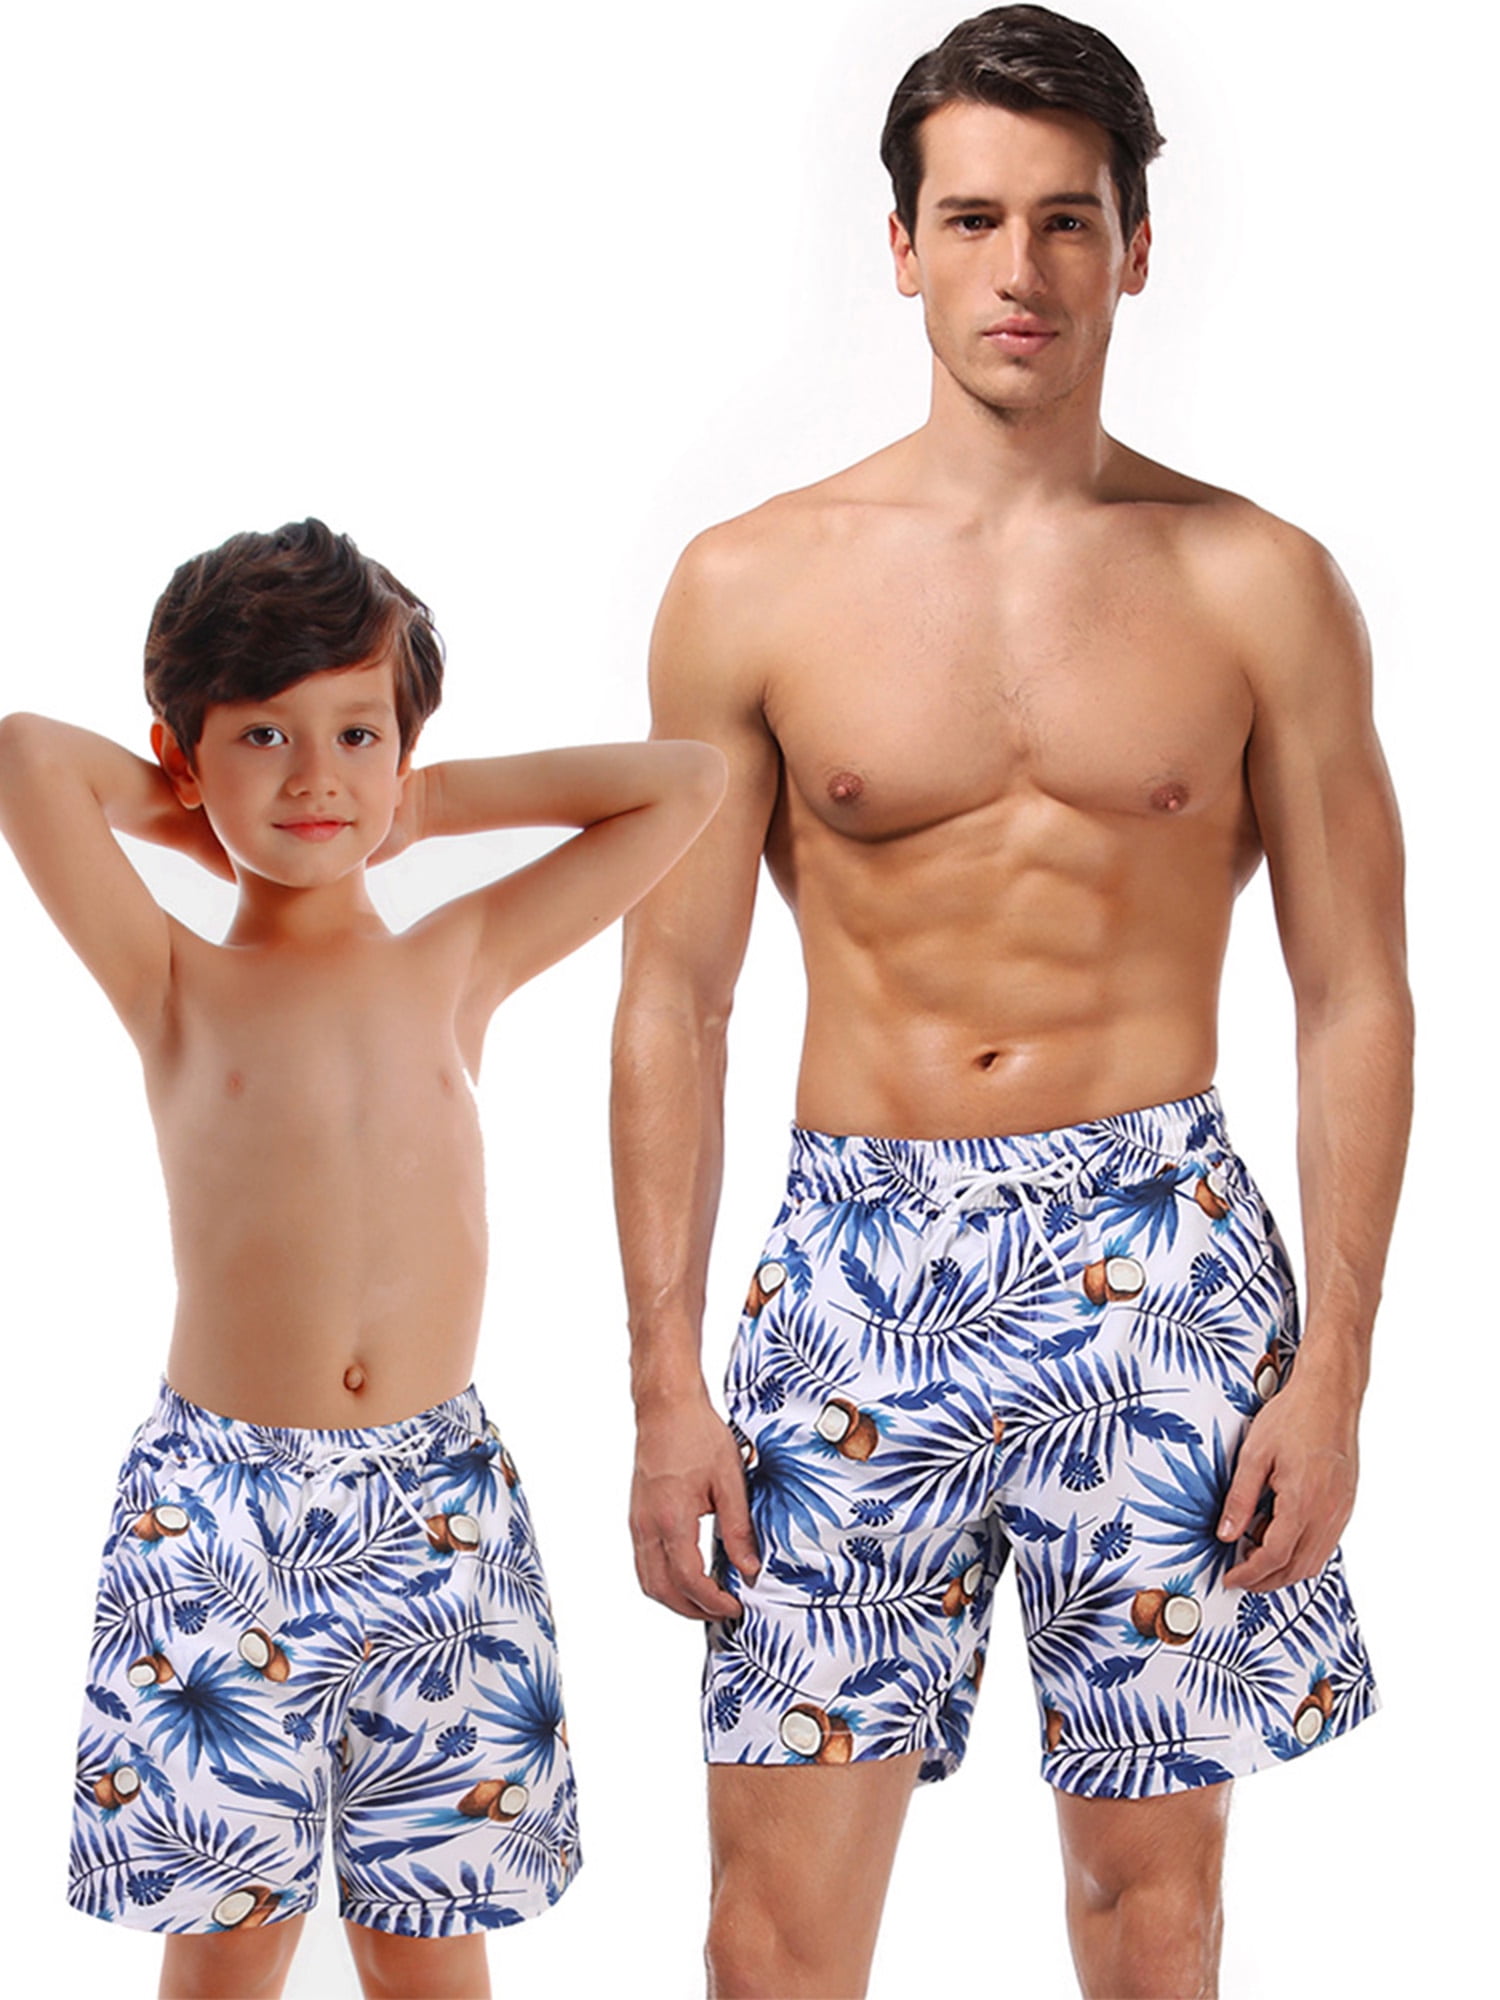 Details about   Boys 3T Swim Trunks Surf Shorts Good Shape Same Day Ship!! 